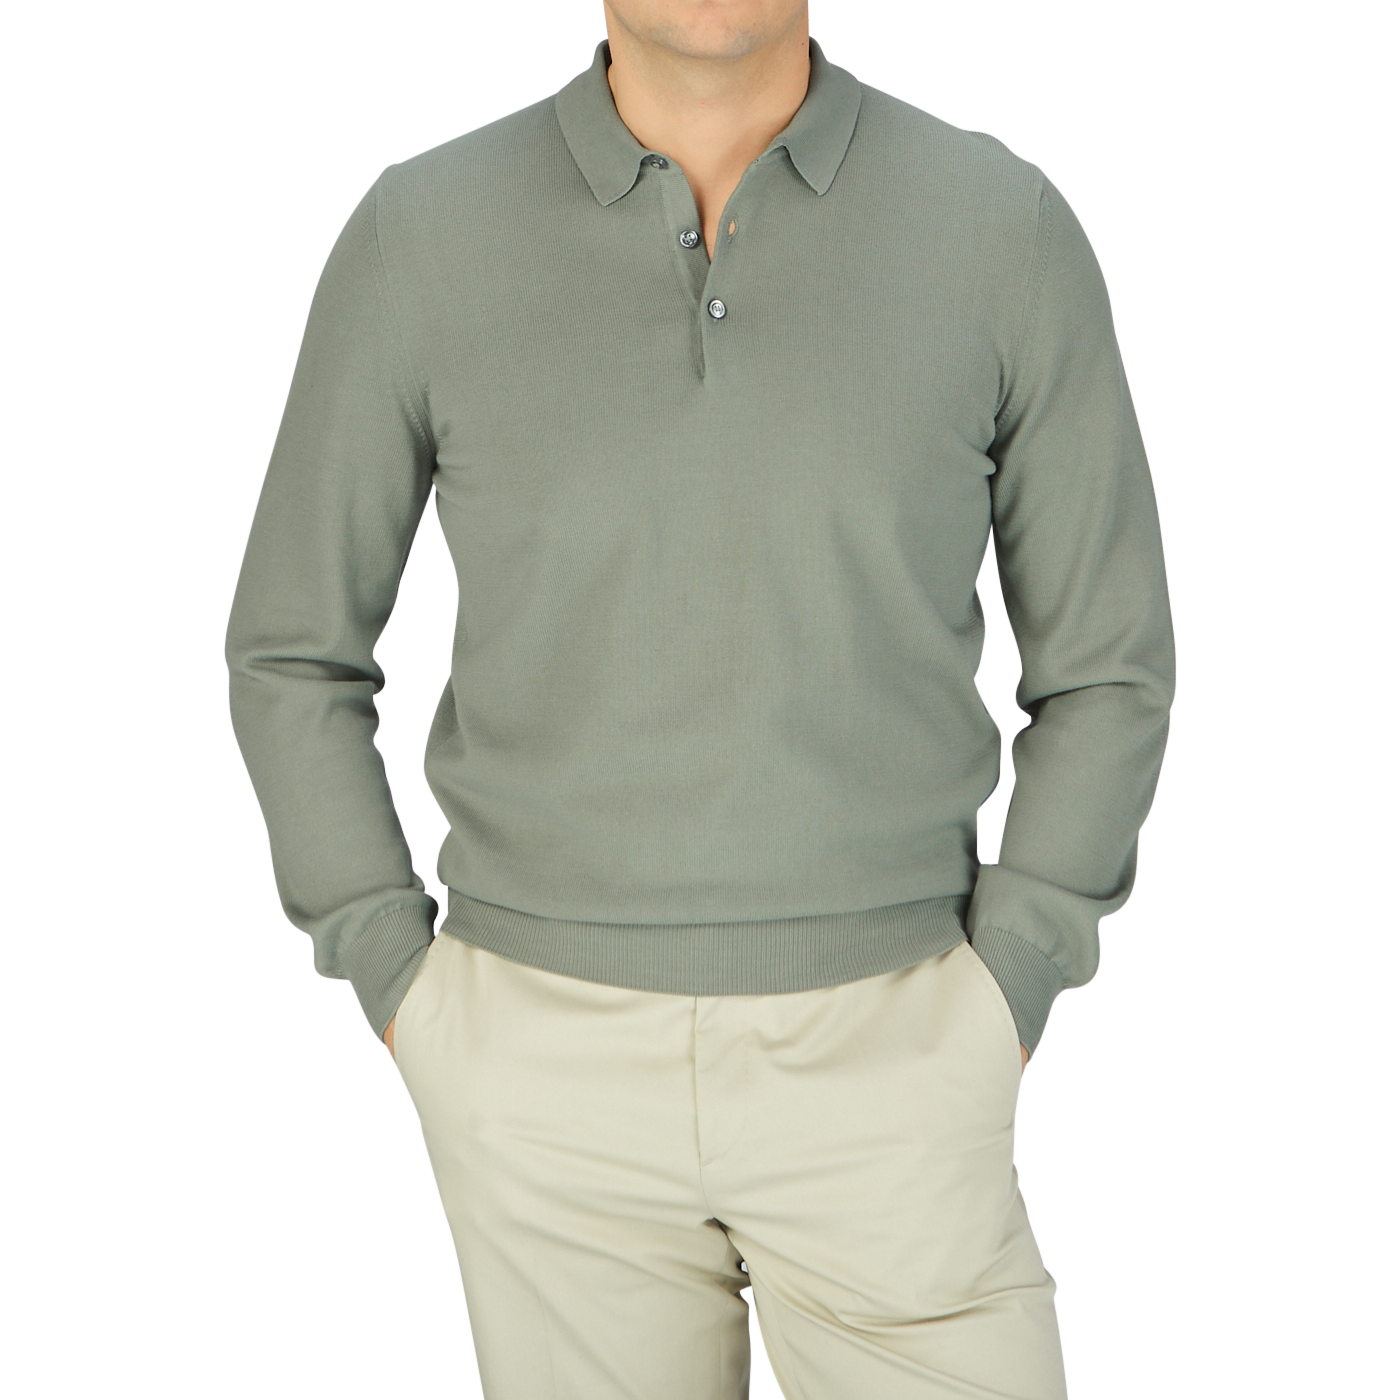 Mauro Ottaviani, wearing a Khaki Green Supima Cotton LS Polo Shirt from Mauro Ottaviani.